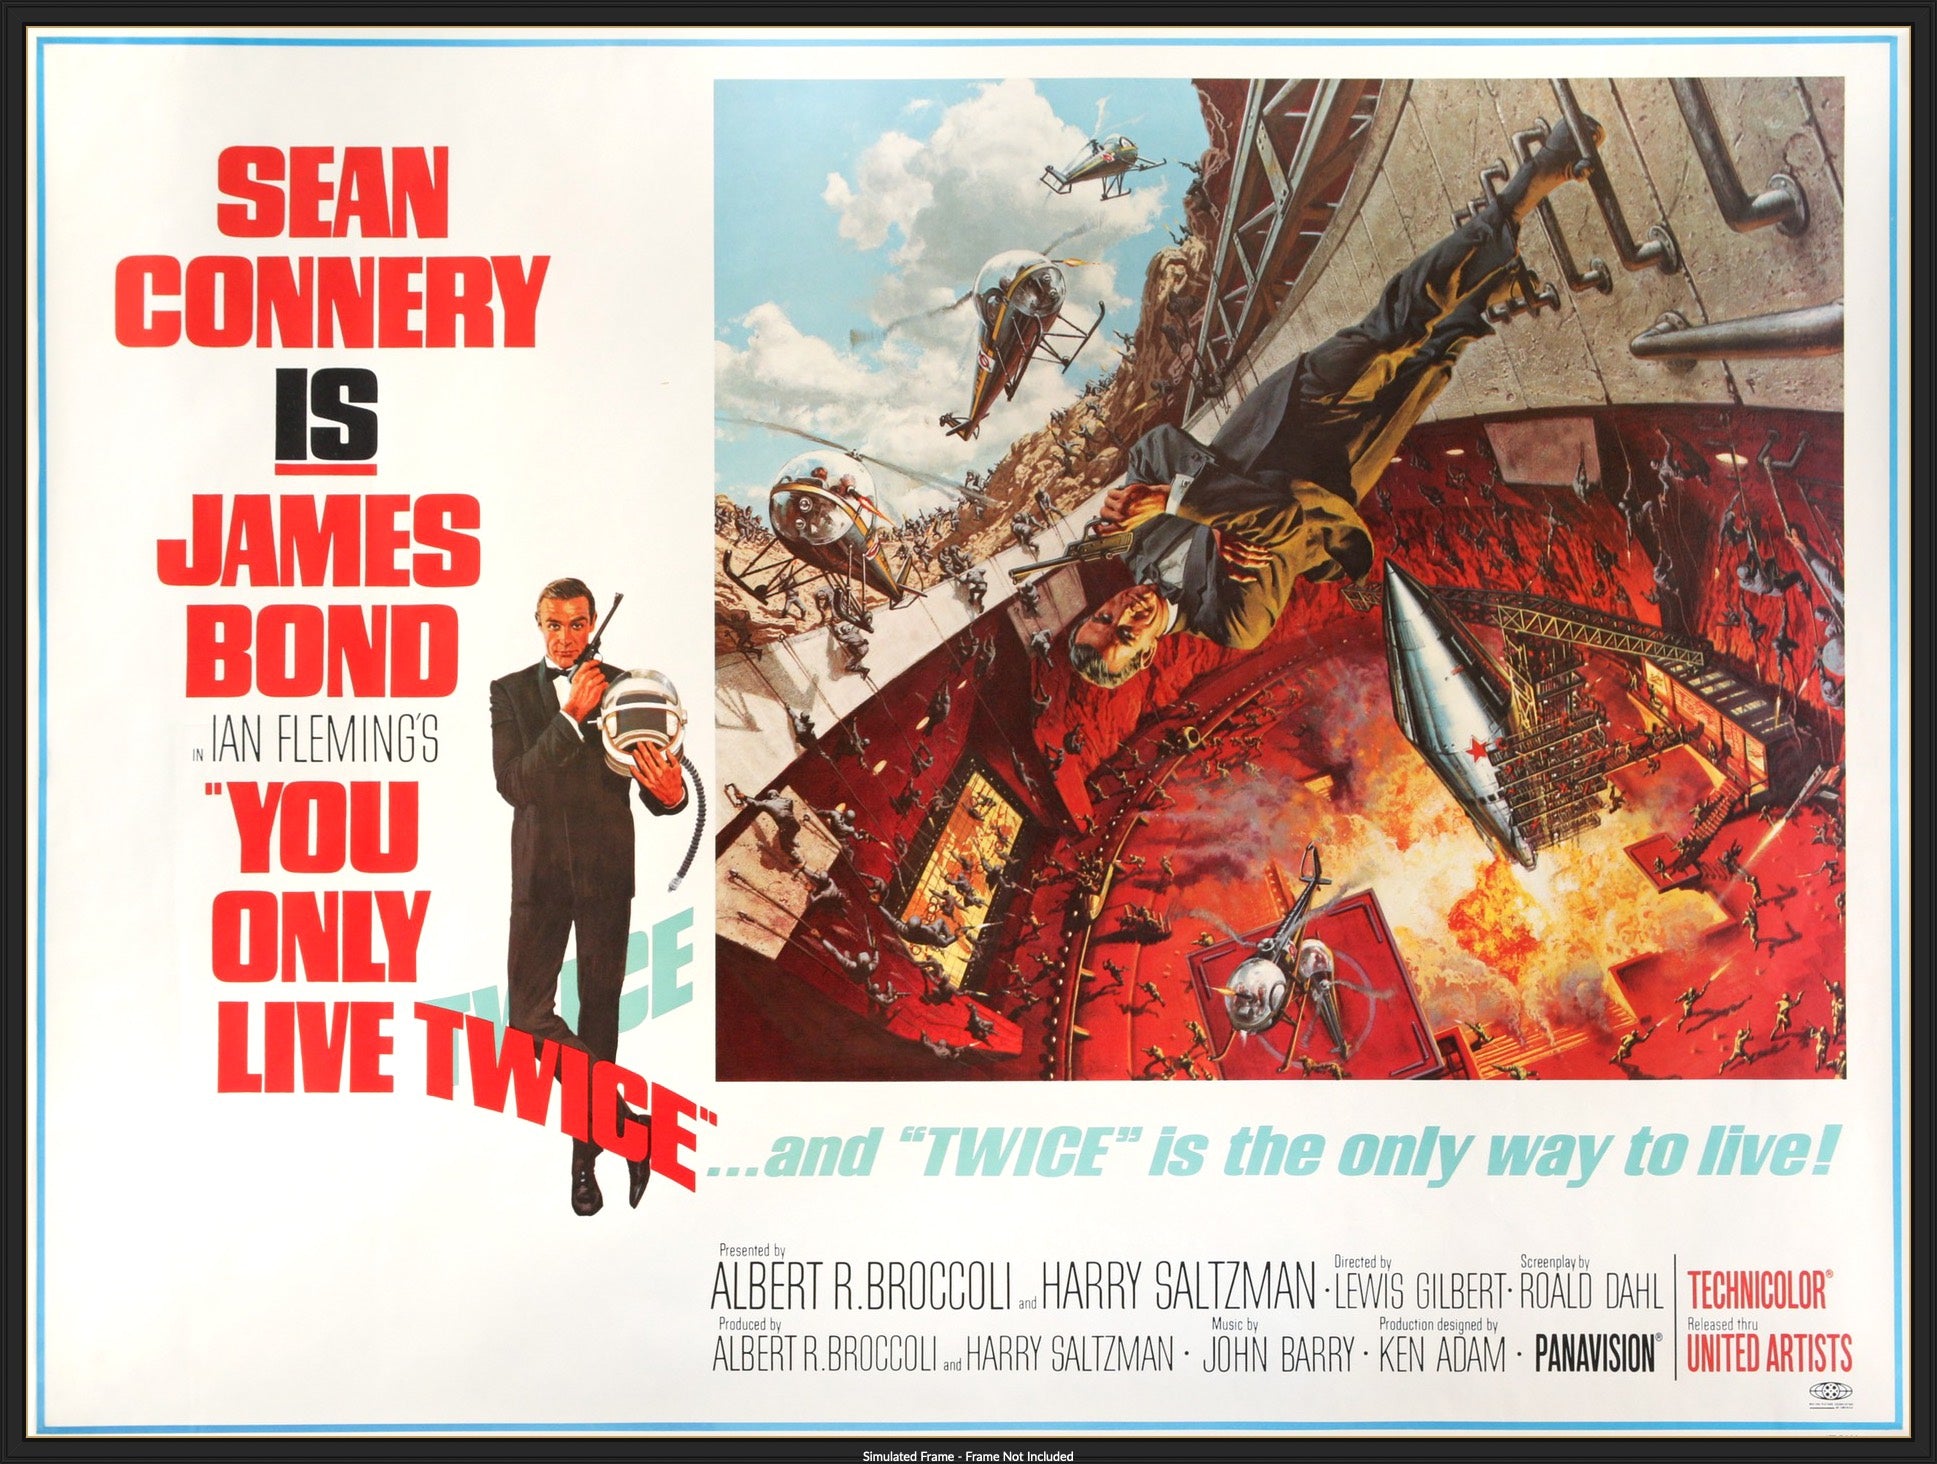 You Only Live Twice (1967) original movie poster for sale at Original Film Art